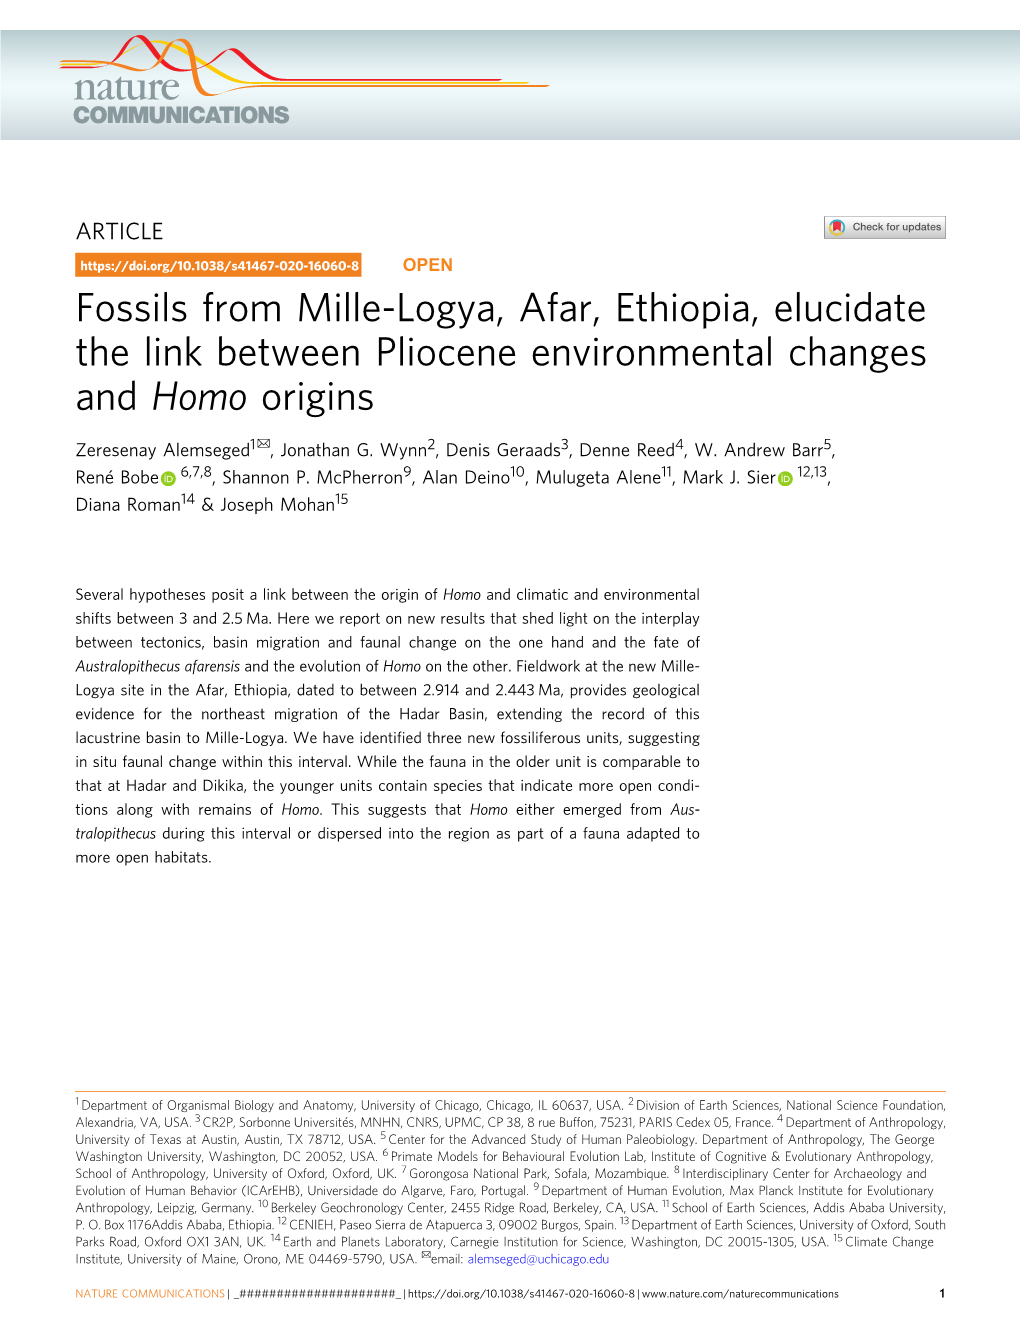 Fossils from Mille-Logya, Afar, Ethiopia, Elucidate the Link Between Pliocene Environmental Changes and Homo Origins